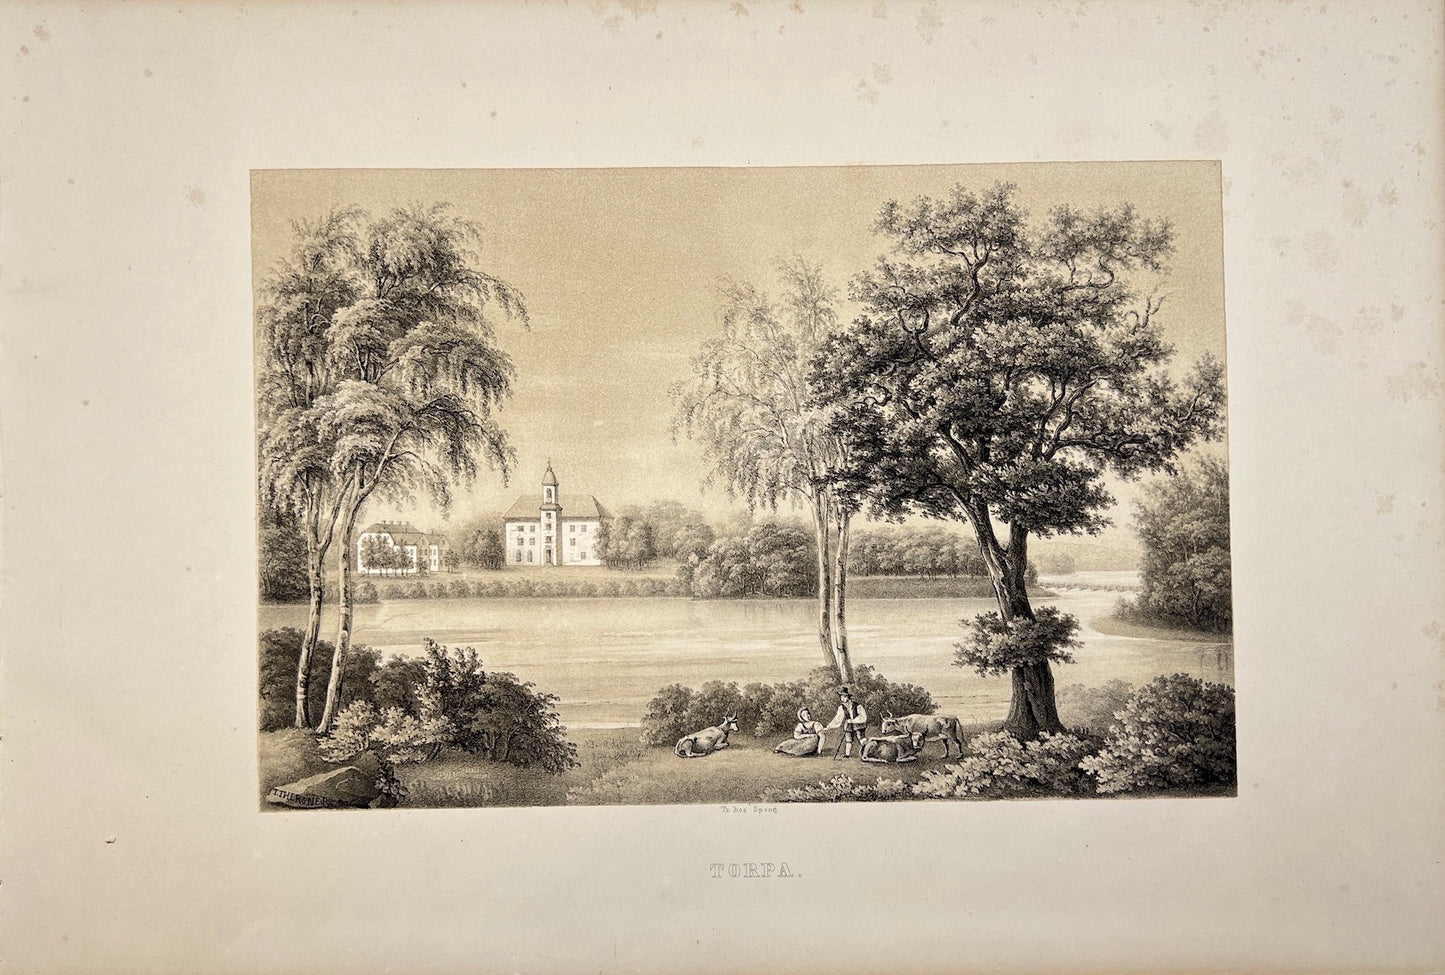 Antique Print - View of Torpa Stone House - Boras - Vastergotland - Sweden